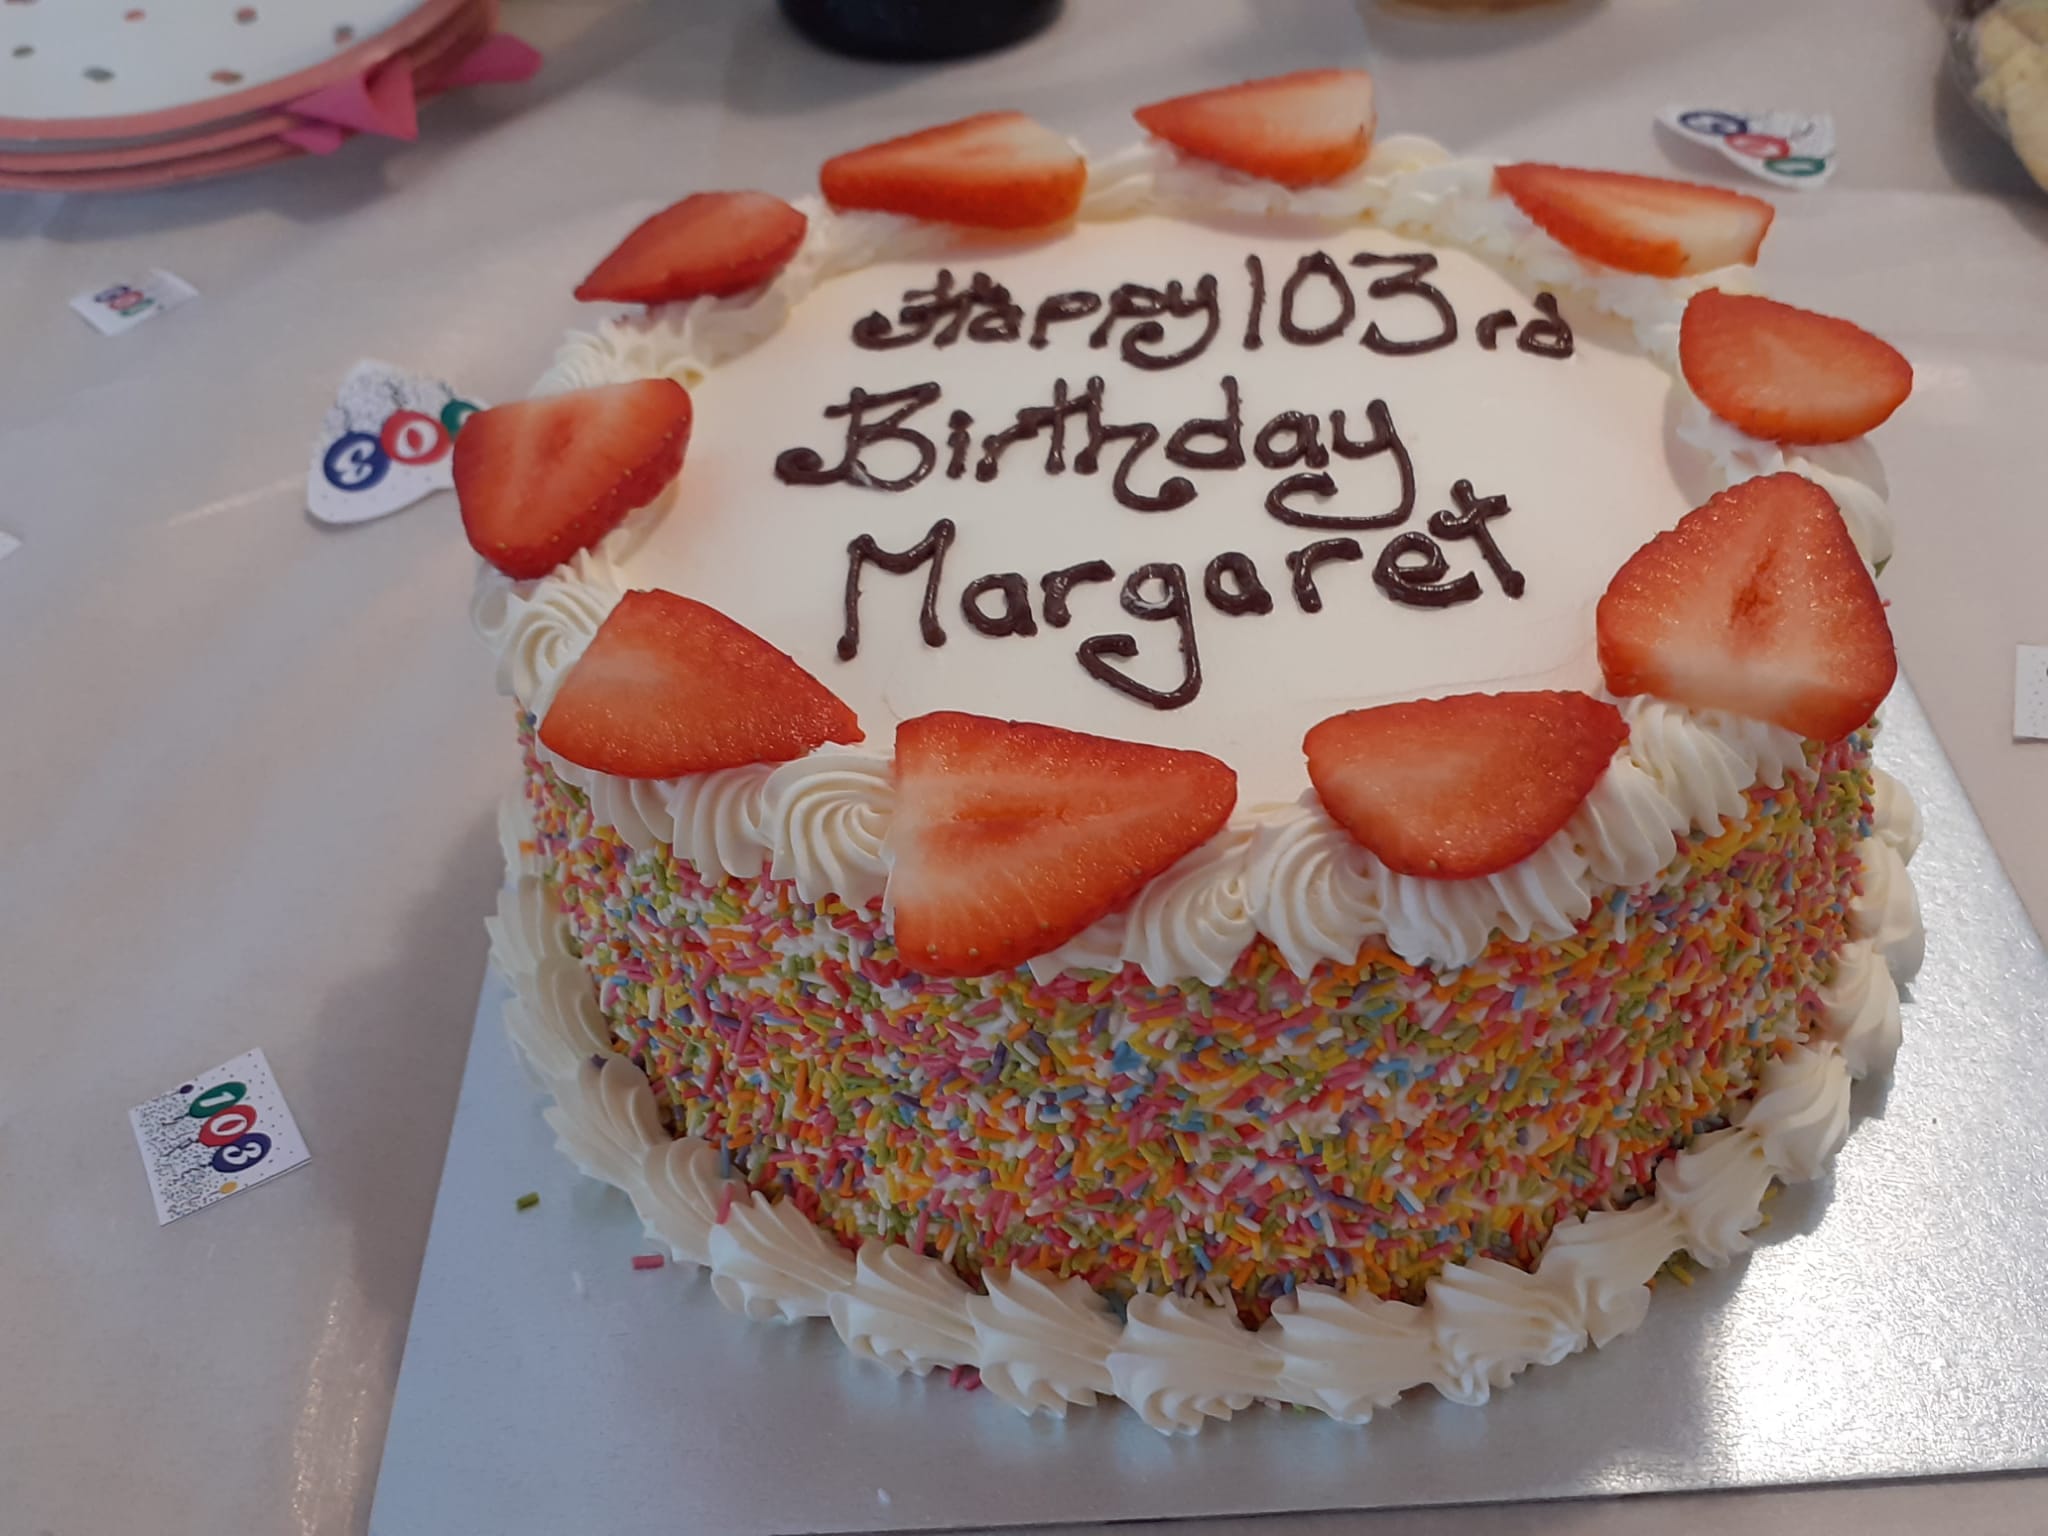 Maggie's 103rd Birthday